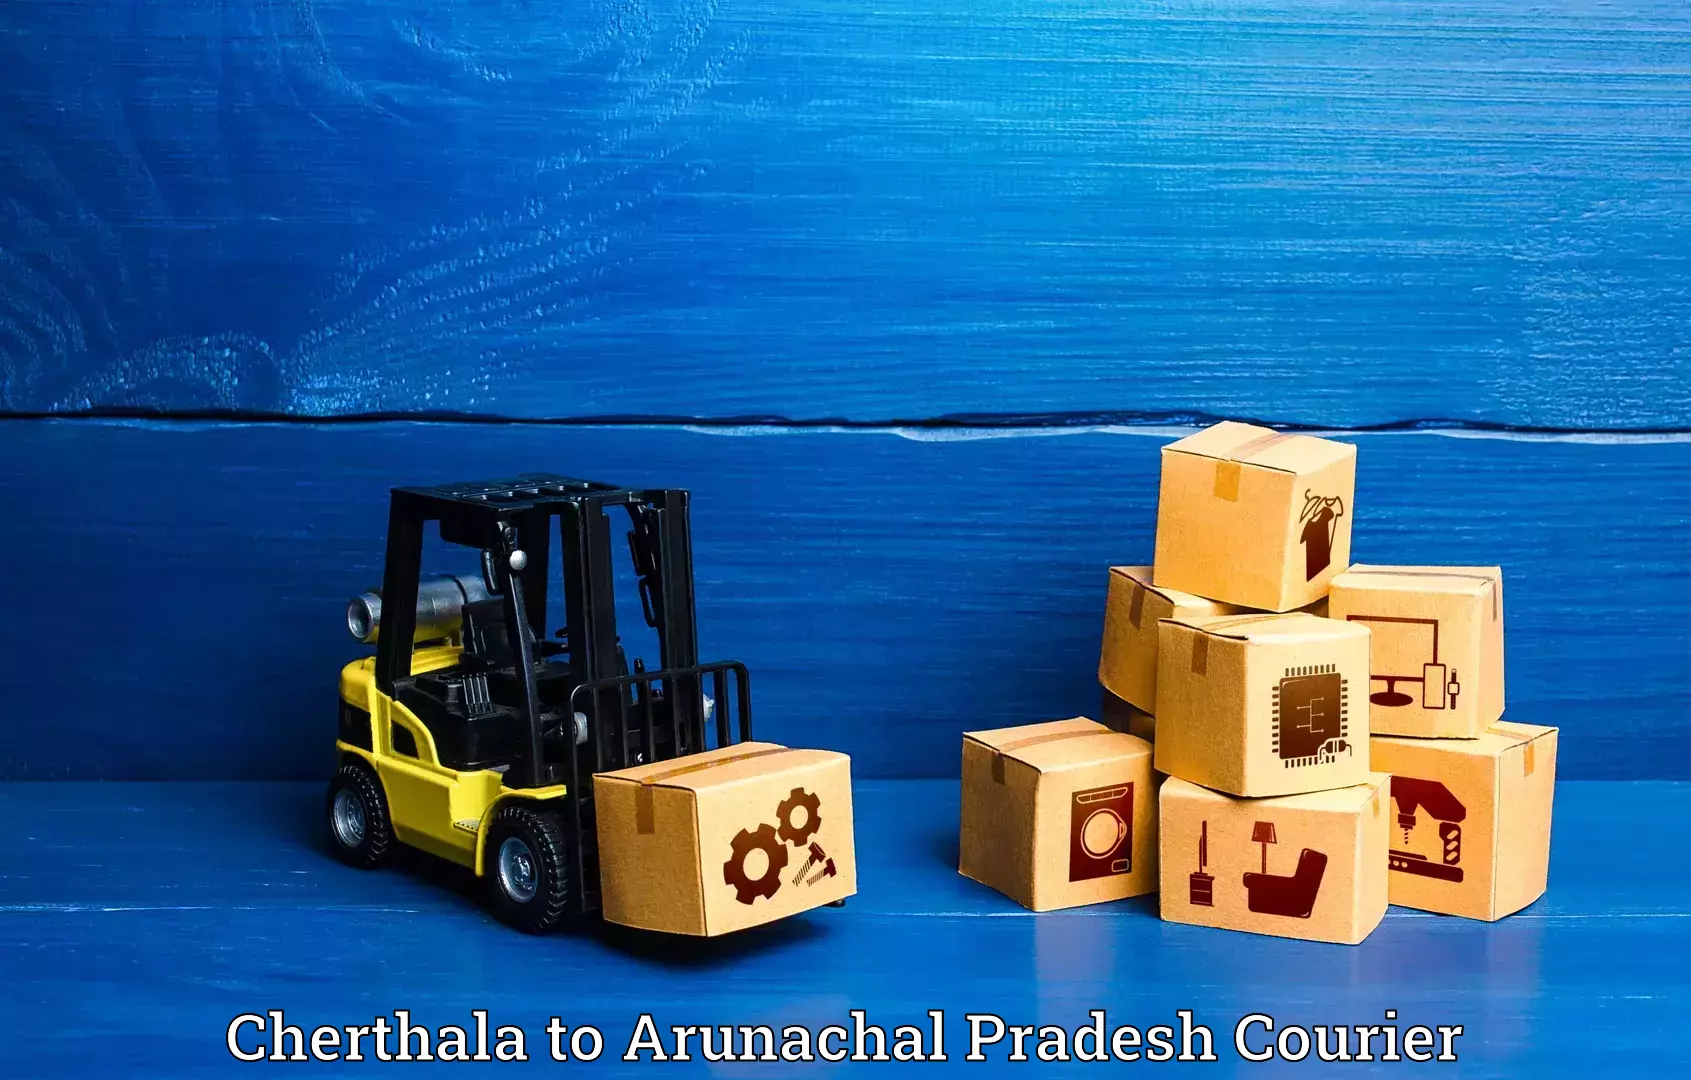 Urgent luggage shipment in Cherthala to Pasighat